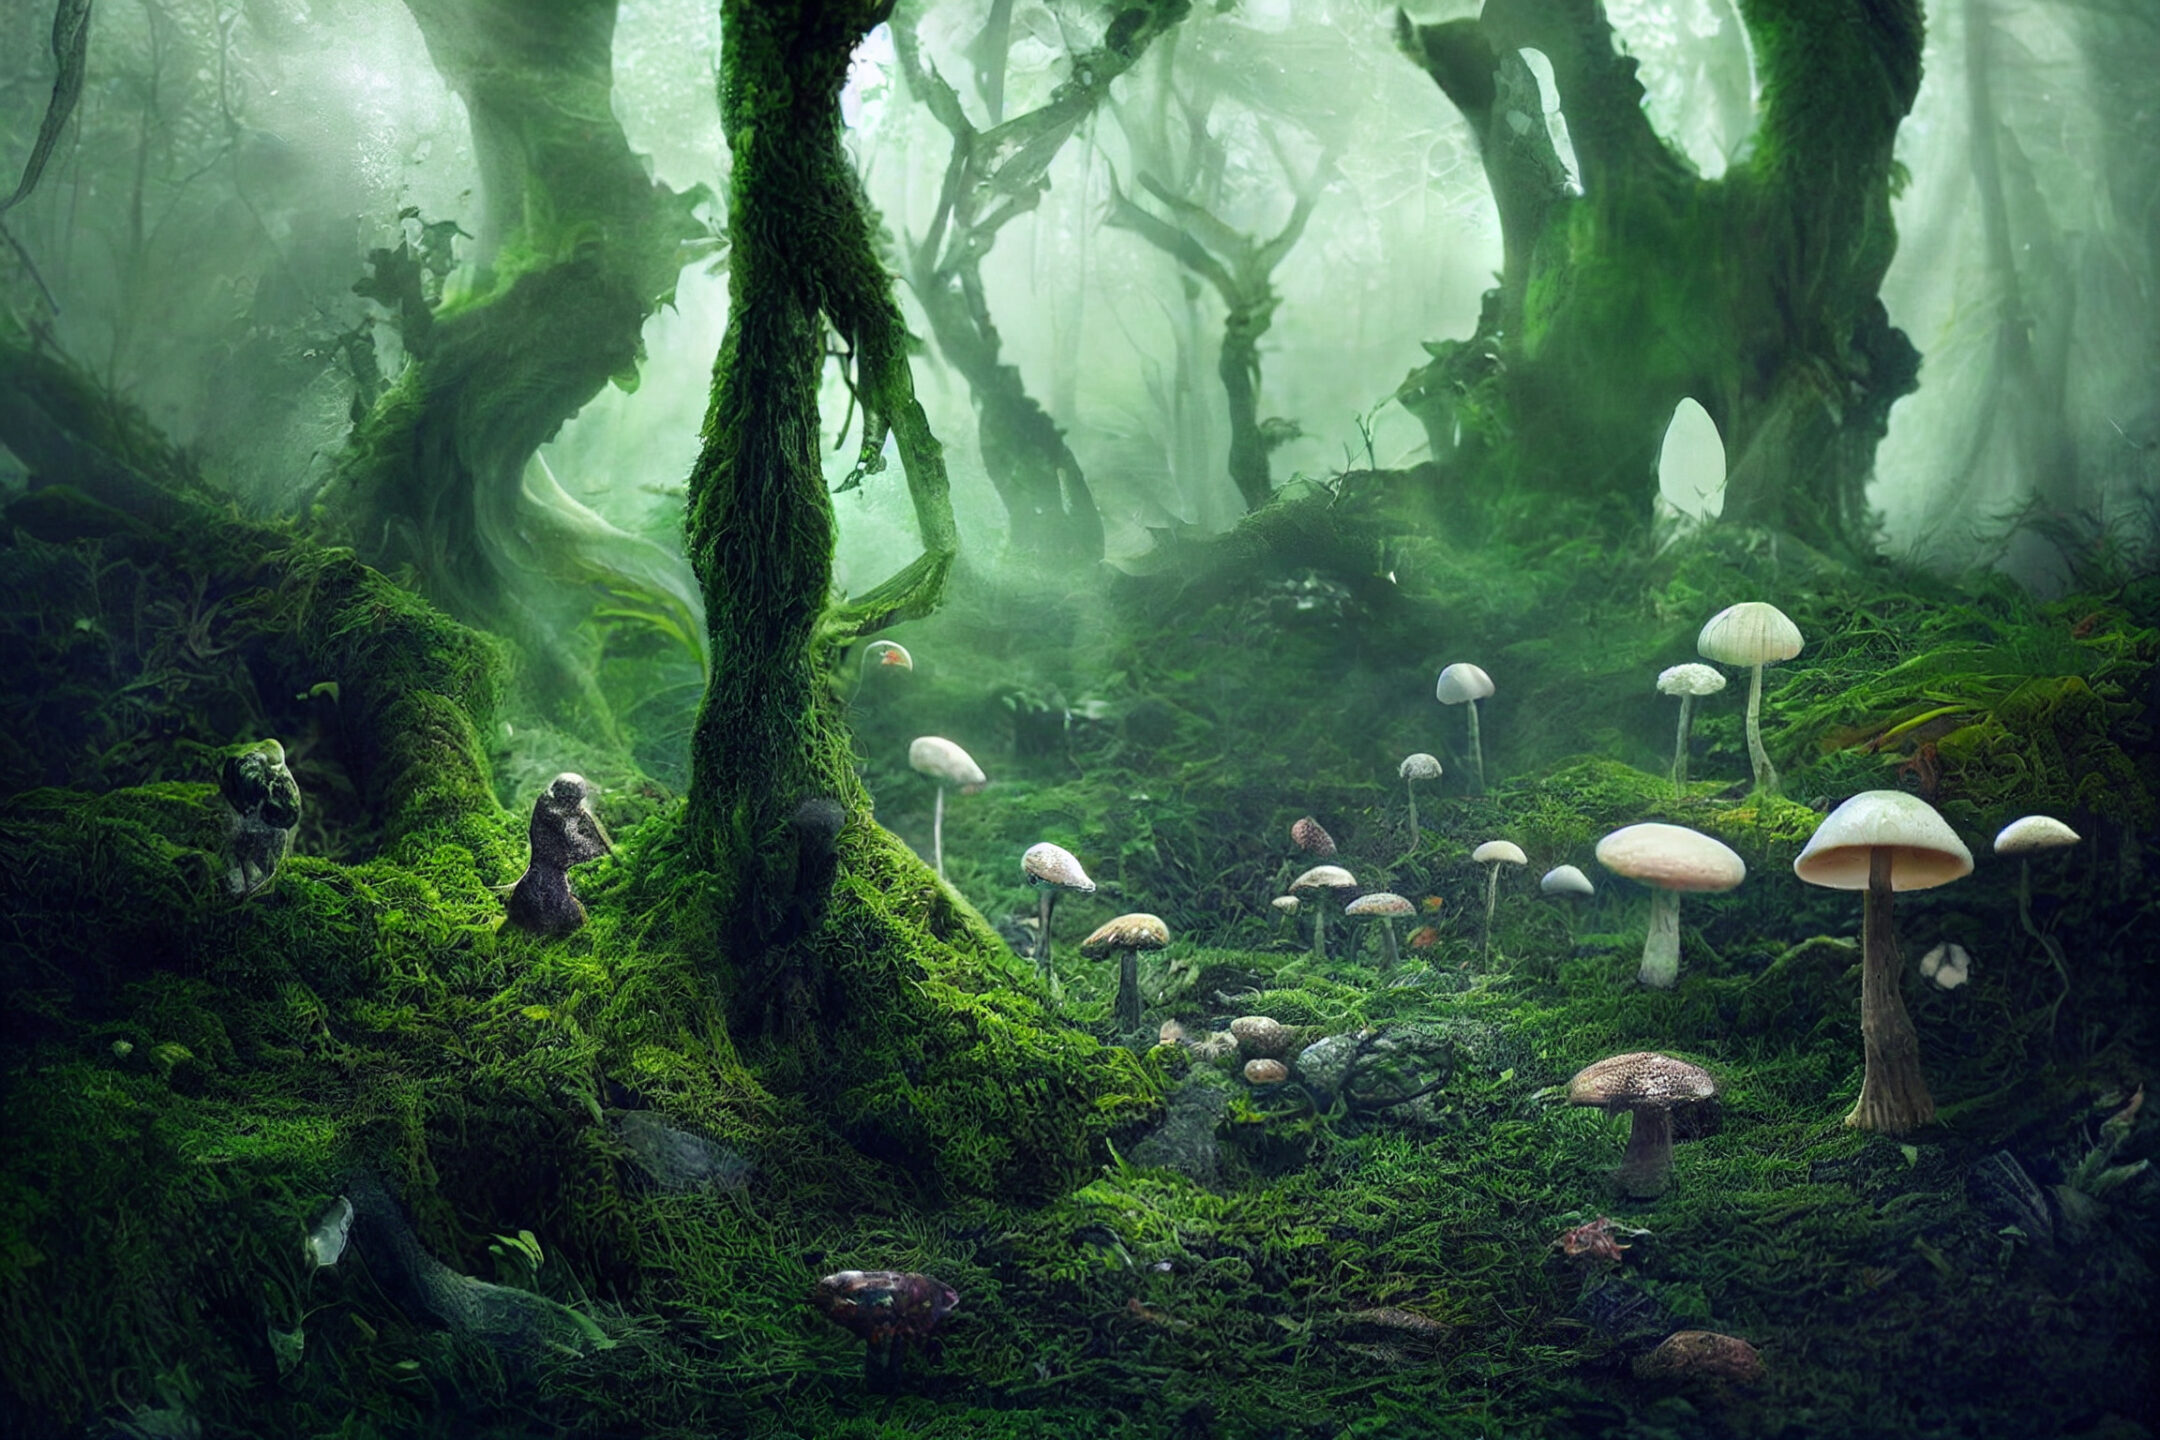 Lezard_des_Mots_a_tiny_forest_fantasy_world_mossy_mushrooms_sha_08774f50-1817-4545-8e12-dcfeae48895d